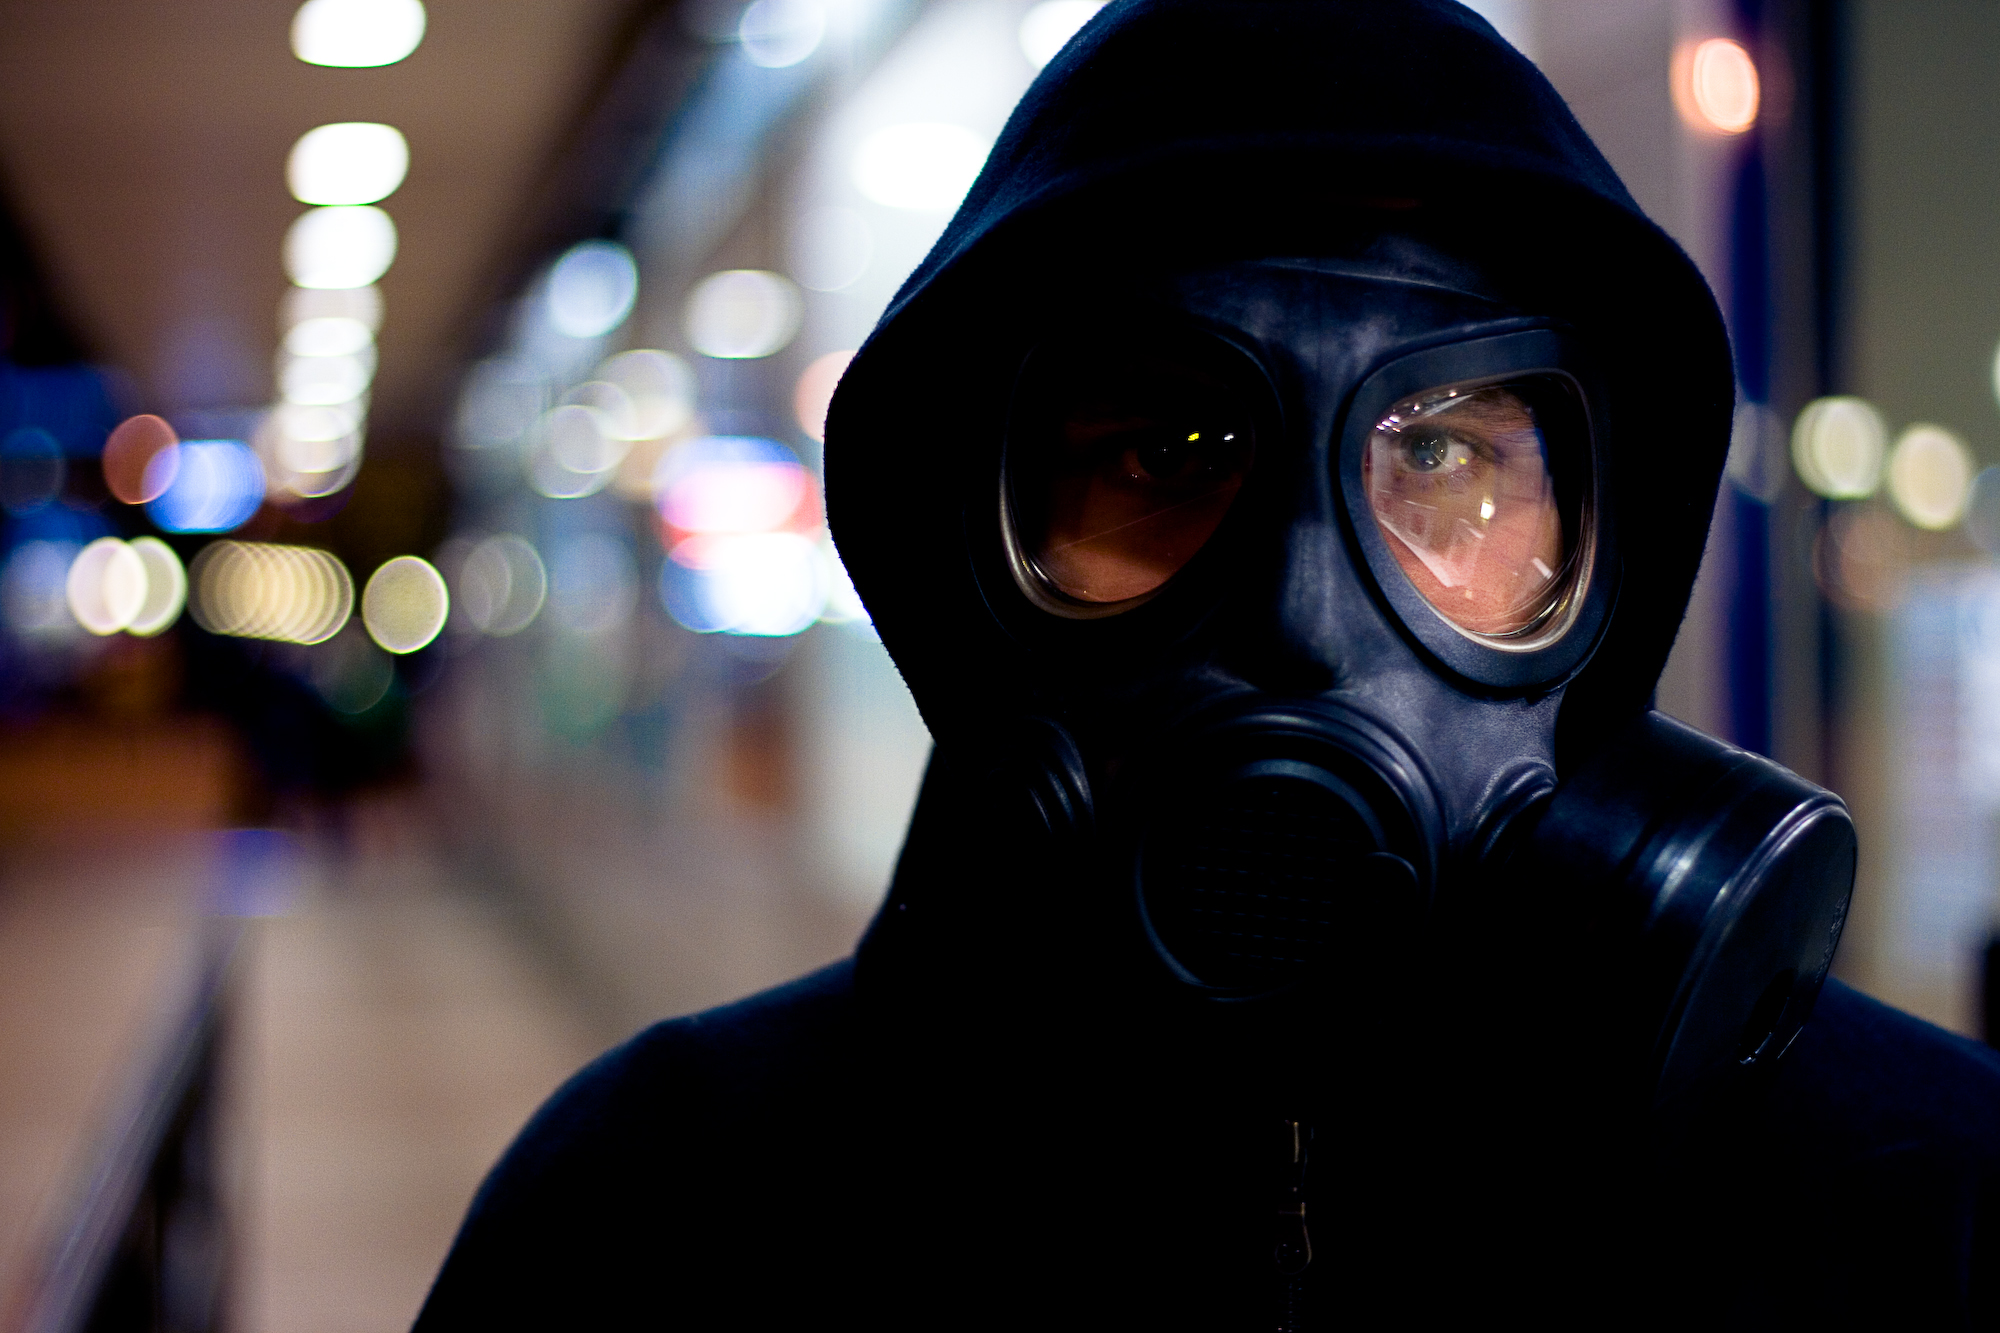 man in gas mask walking on city street at night